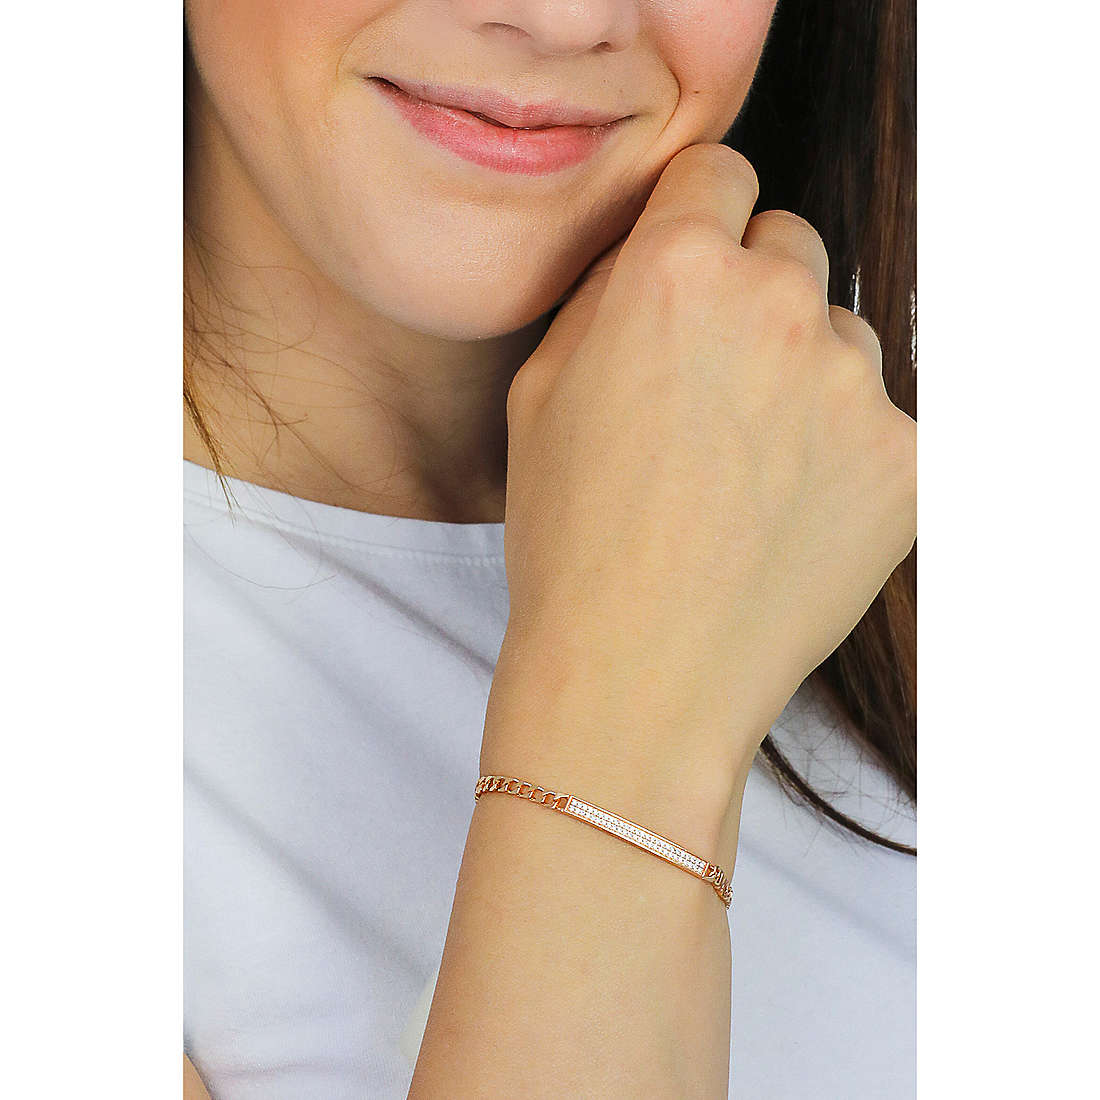 Michael Kors bracelets Mk Statement Link woman MKC1379AN791 wearing